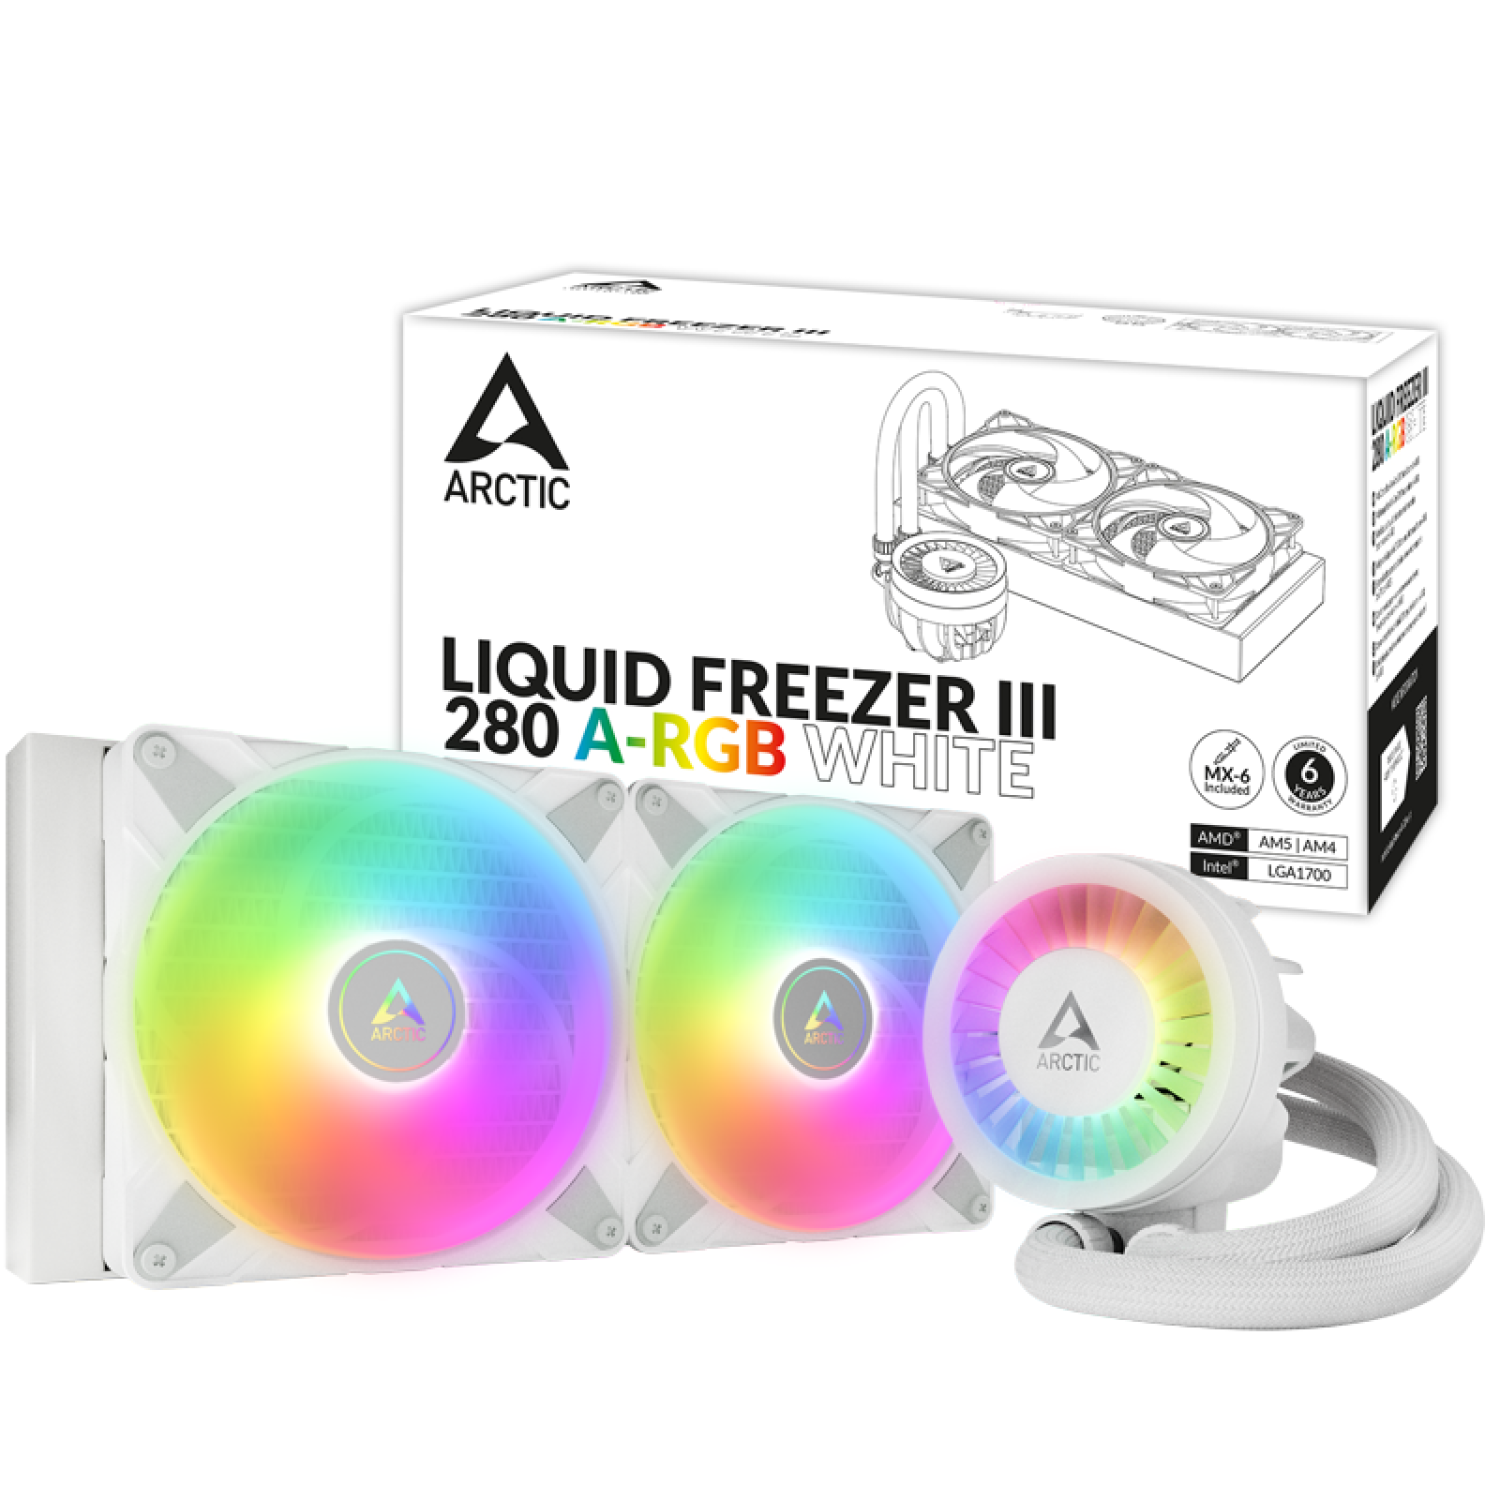 Liquid Freezer III 280 A-RGB (White)